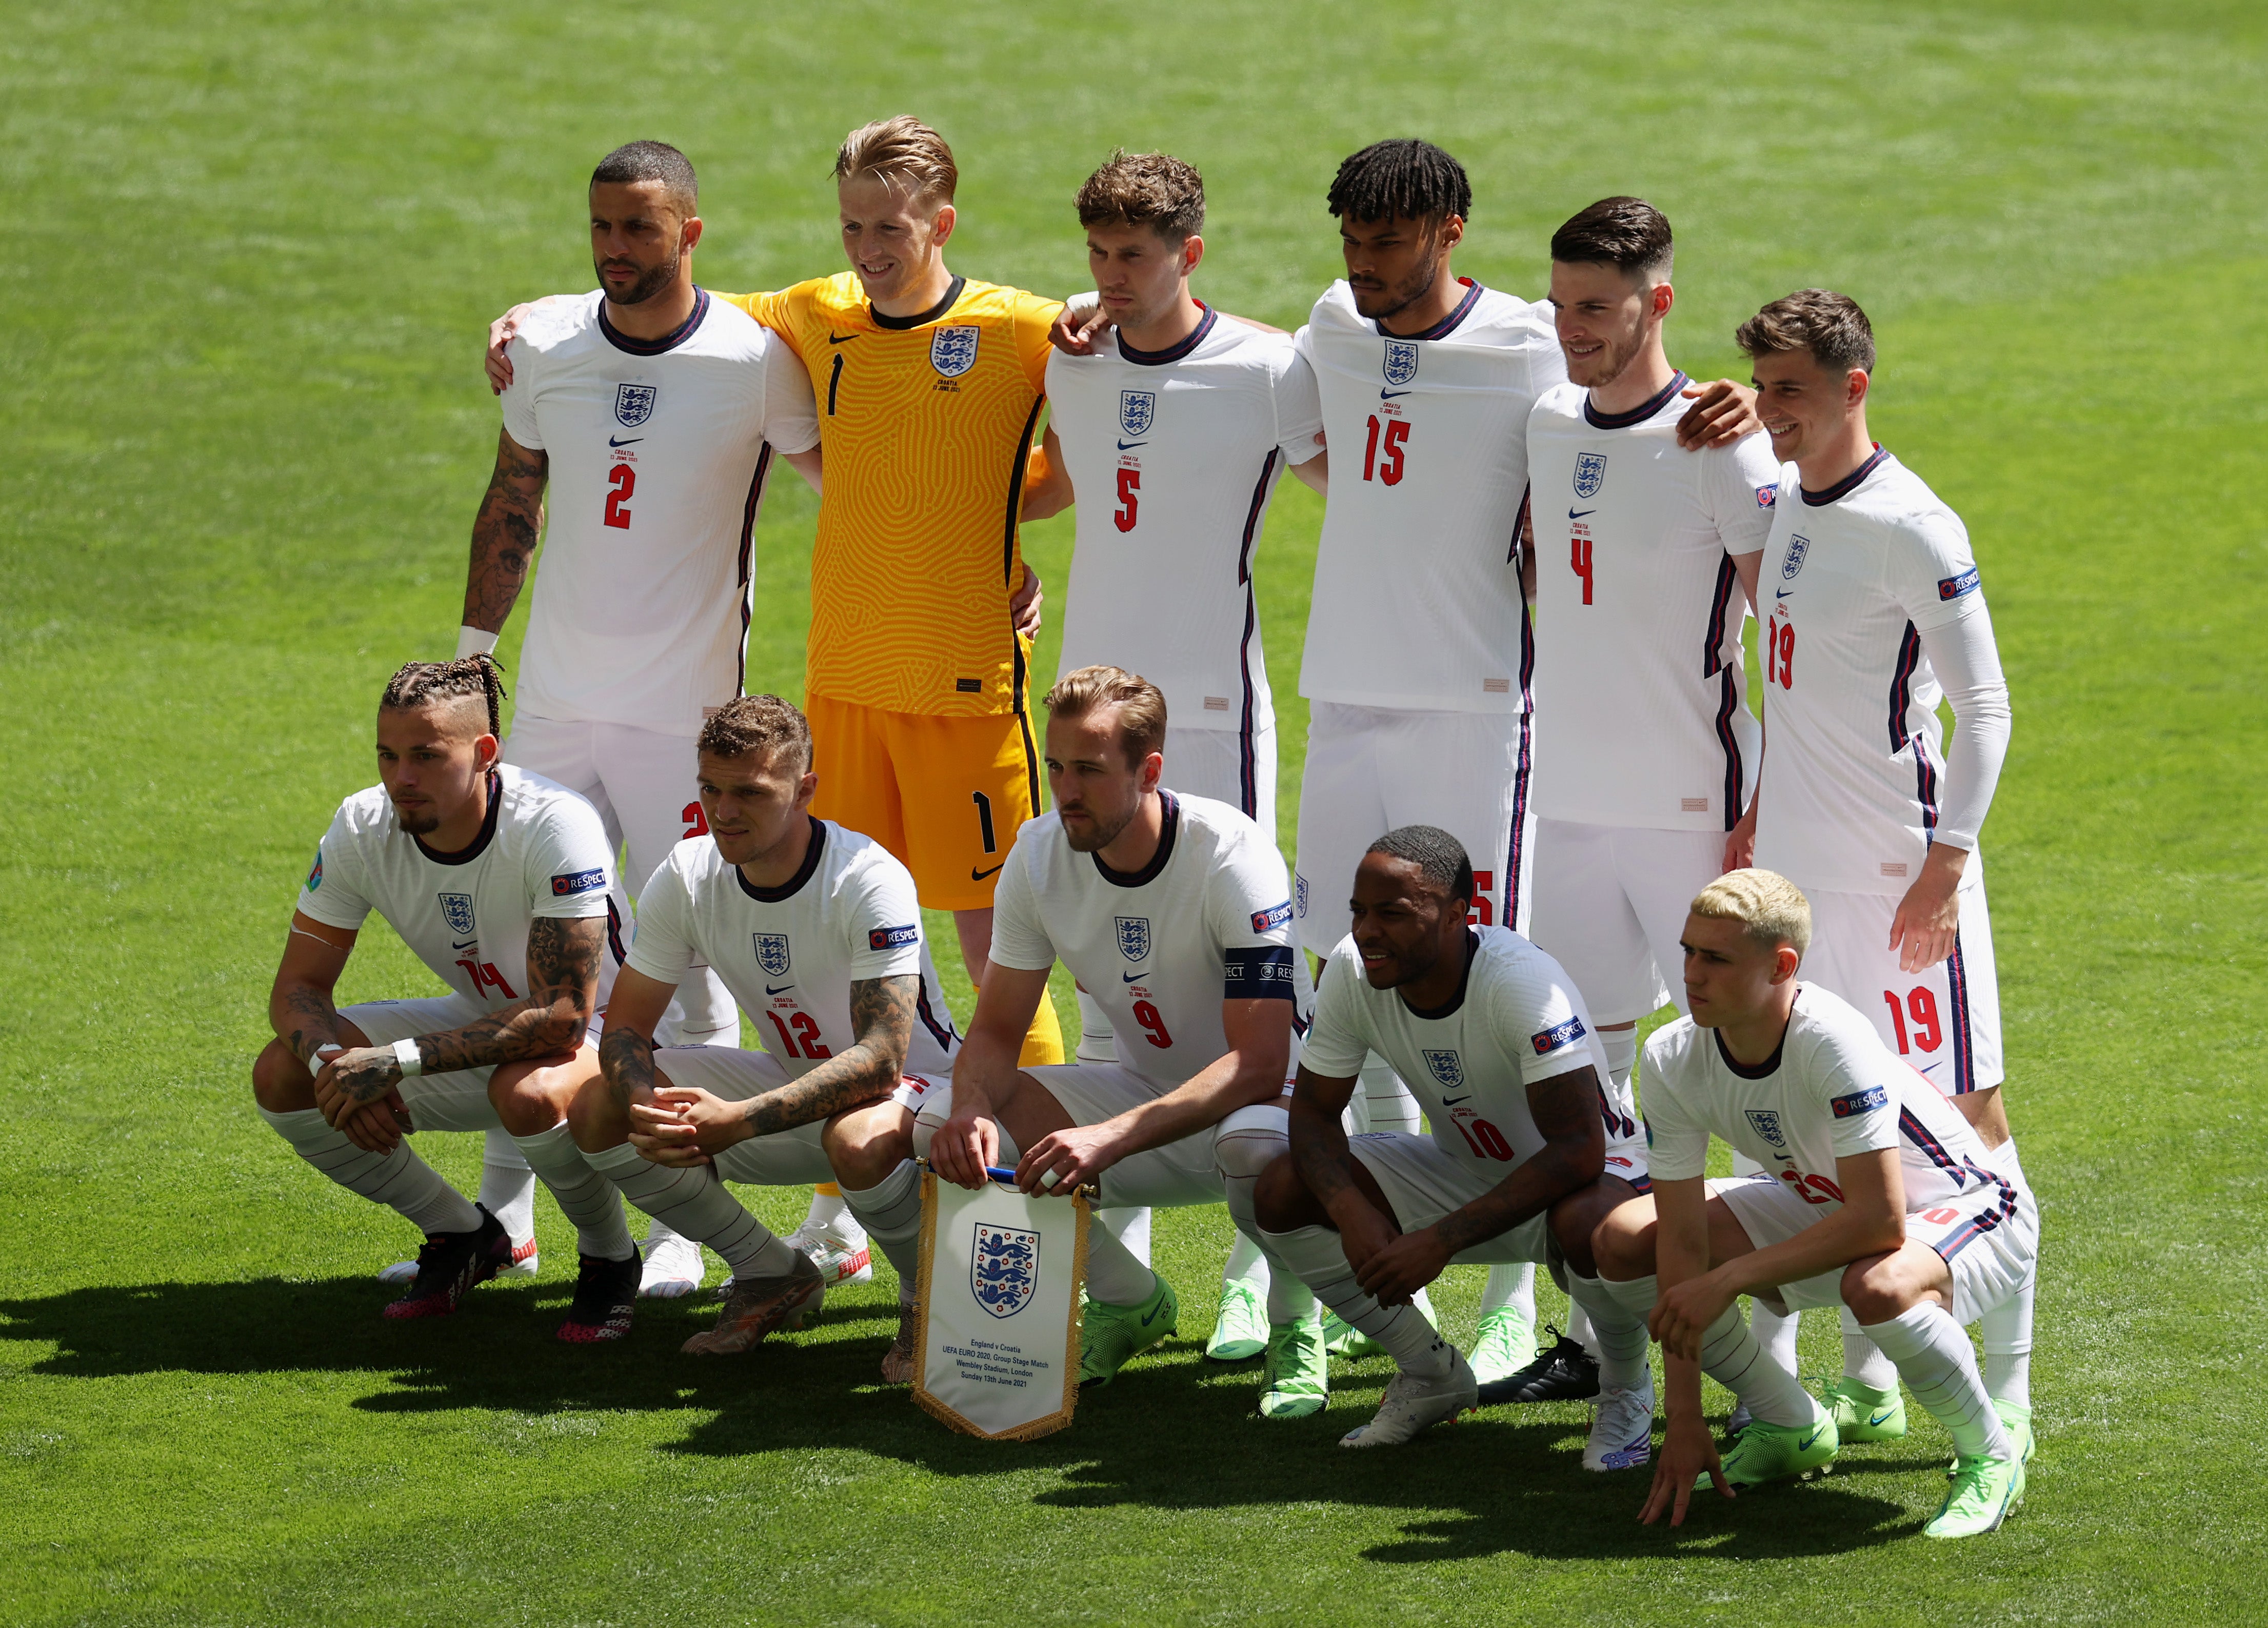 England vs germany line up